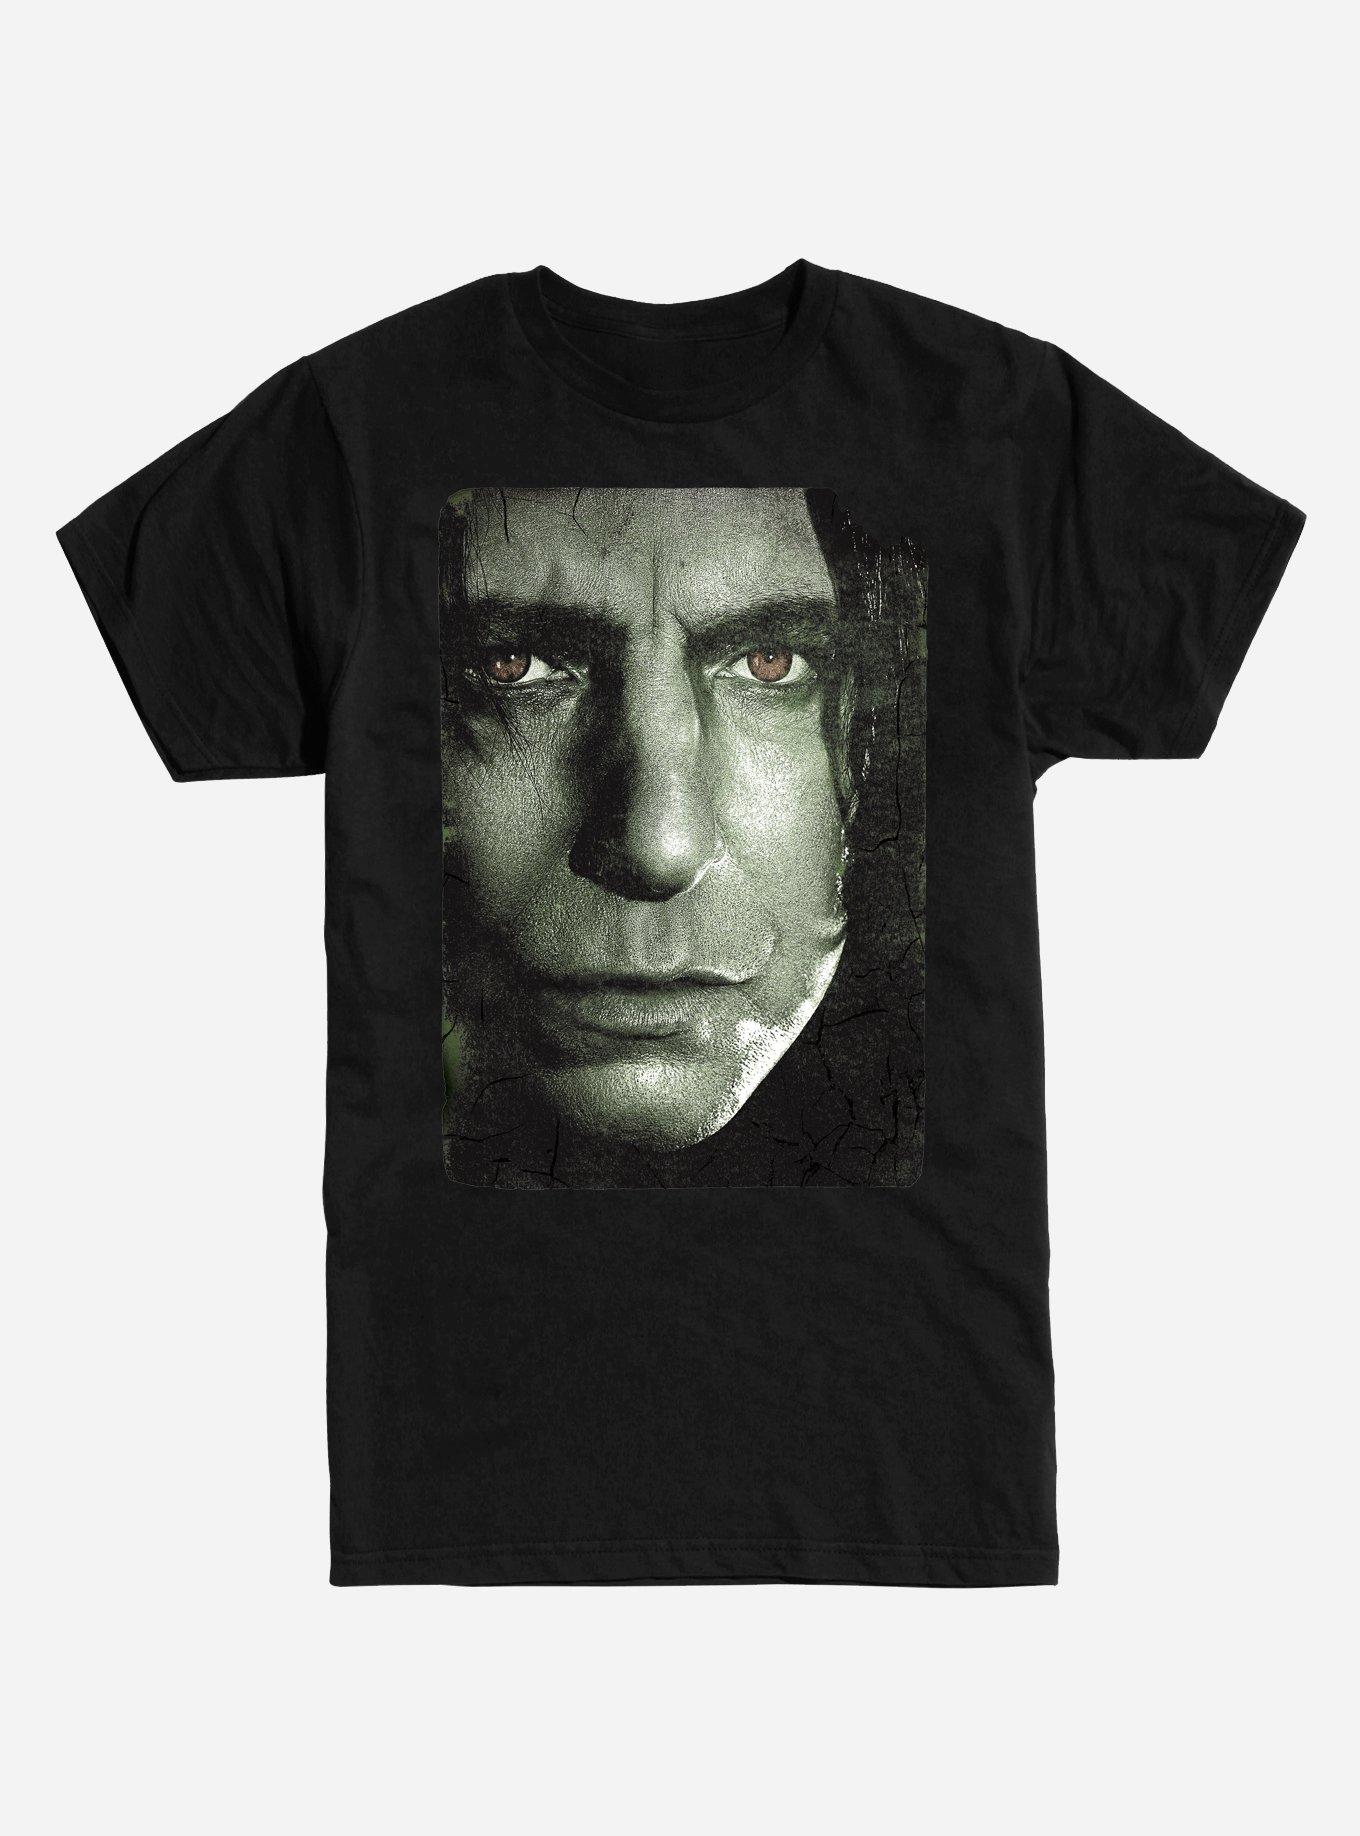 Harry Potter Close Up Snape T-Shirt